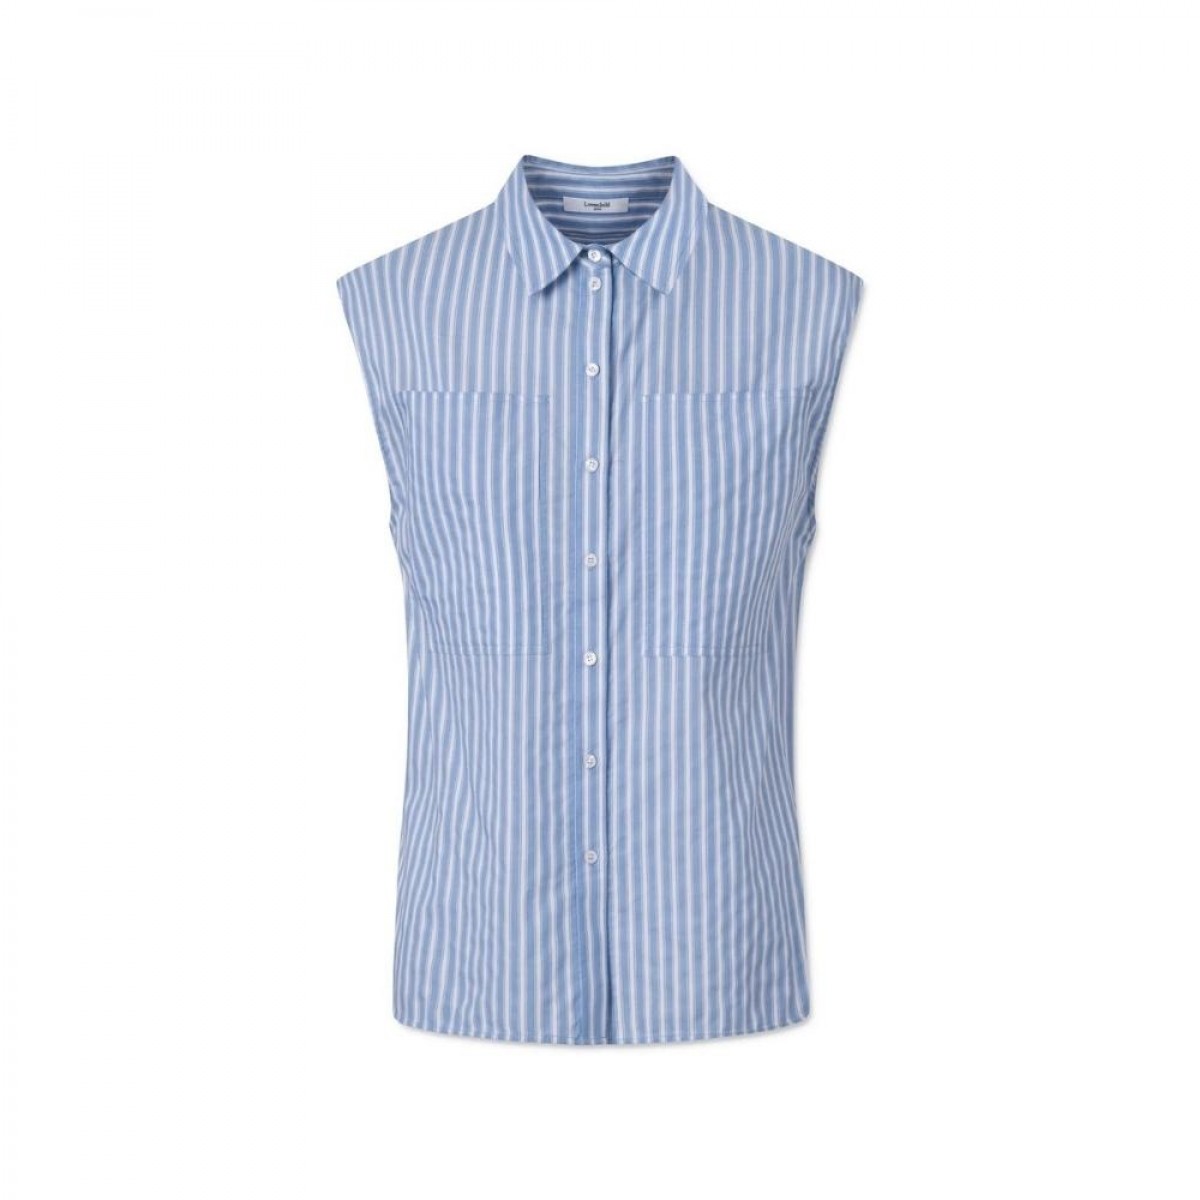 veneda shirt - clear blue - front